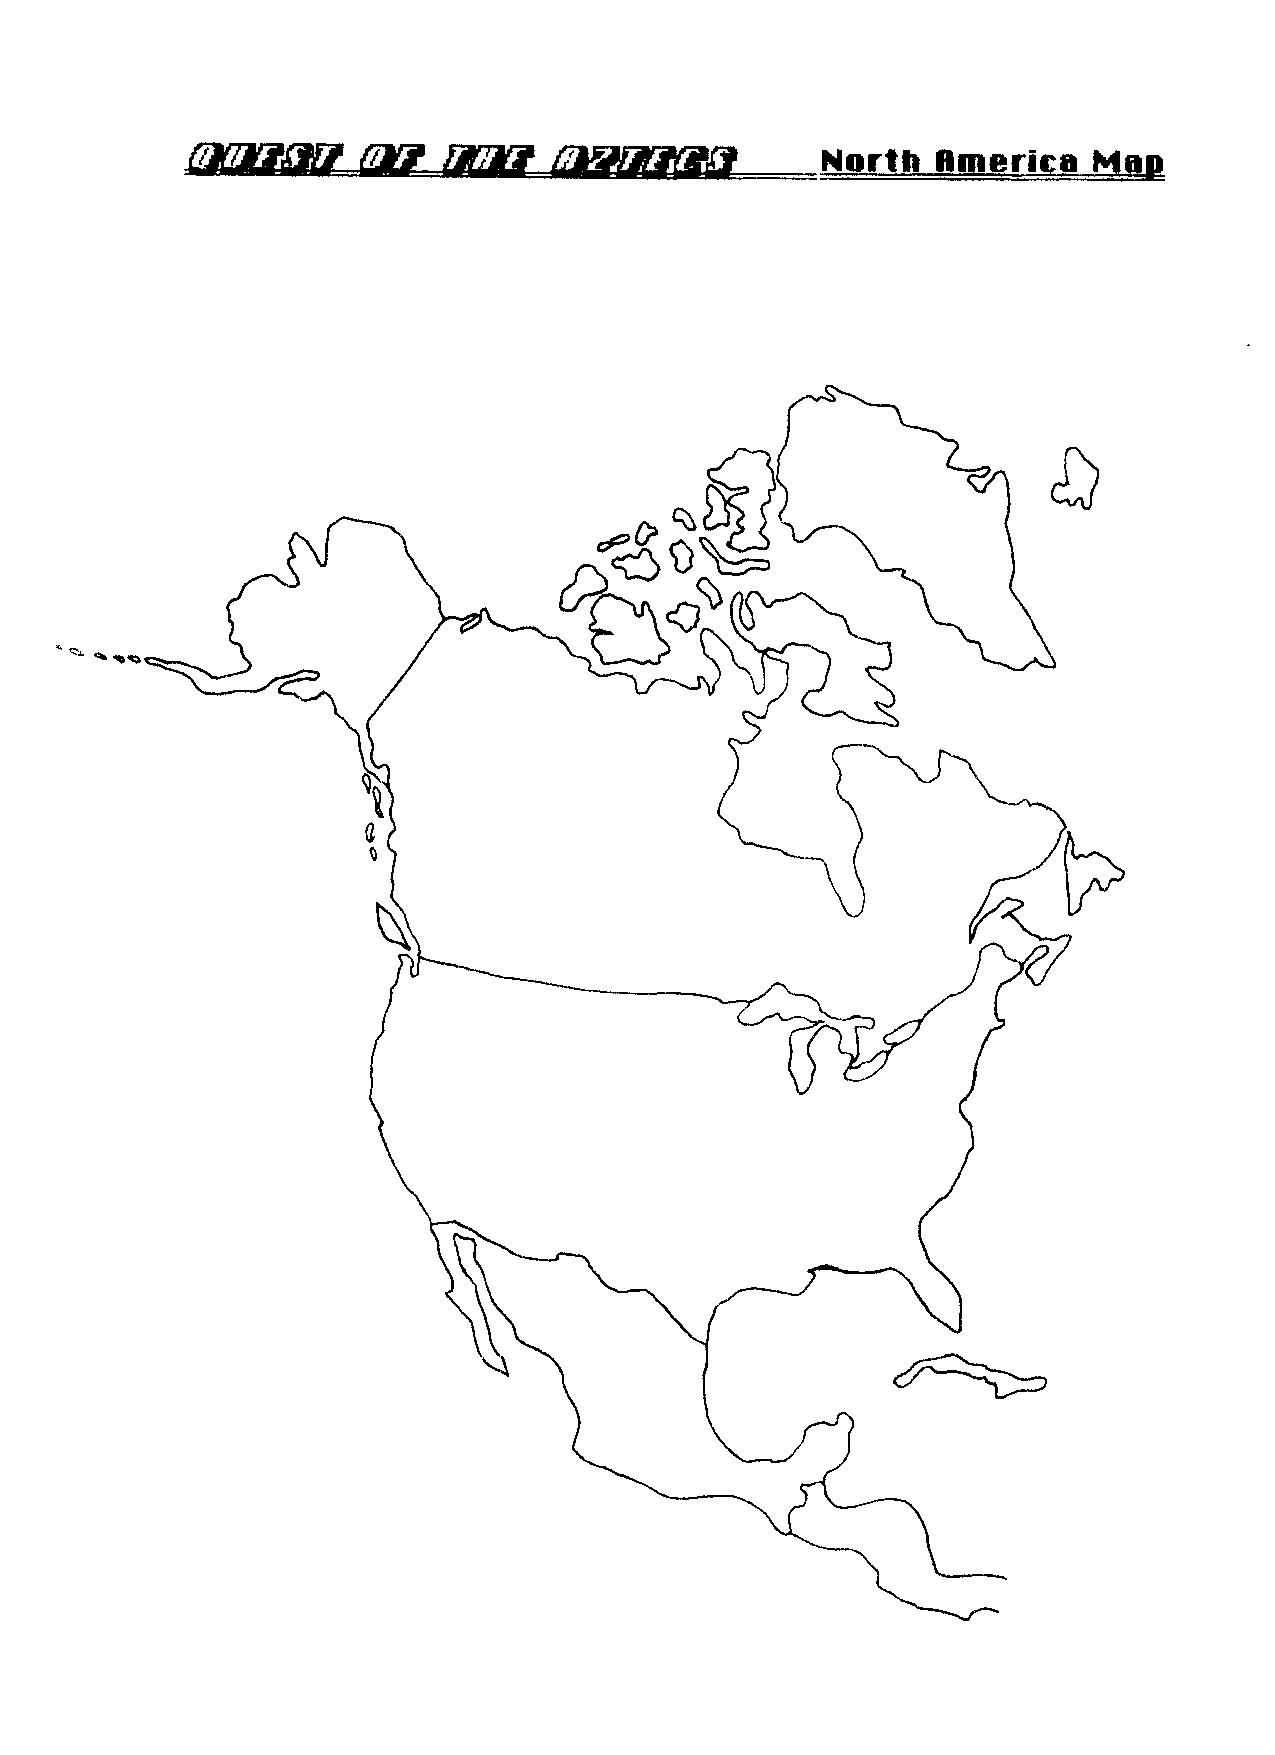 North America Map Blank Worksheet Image